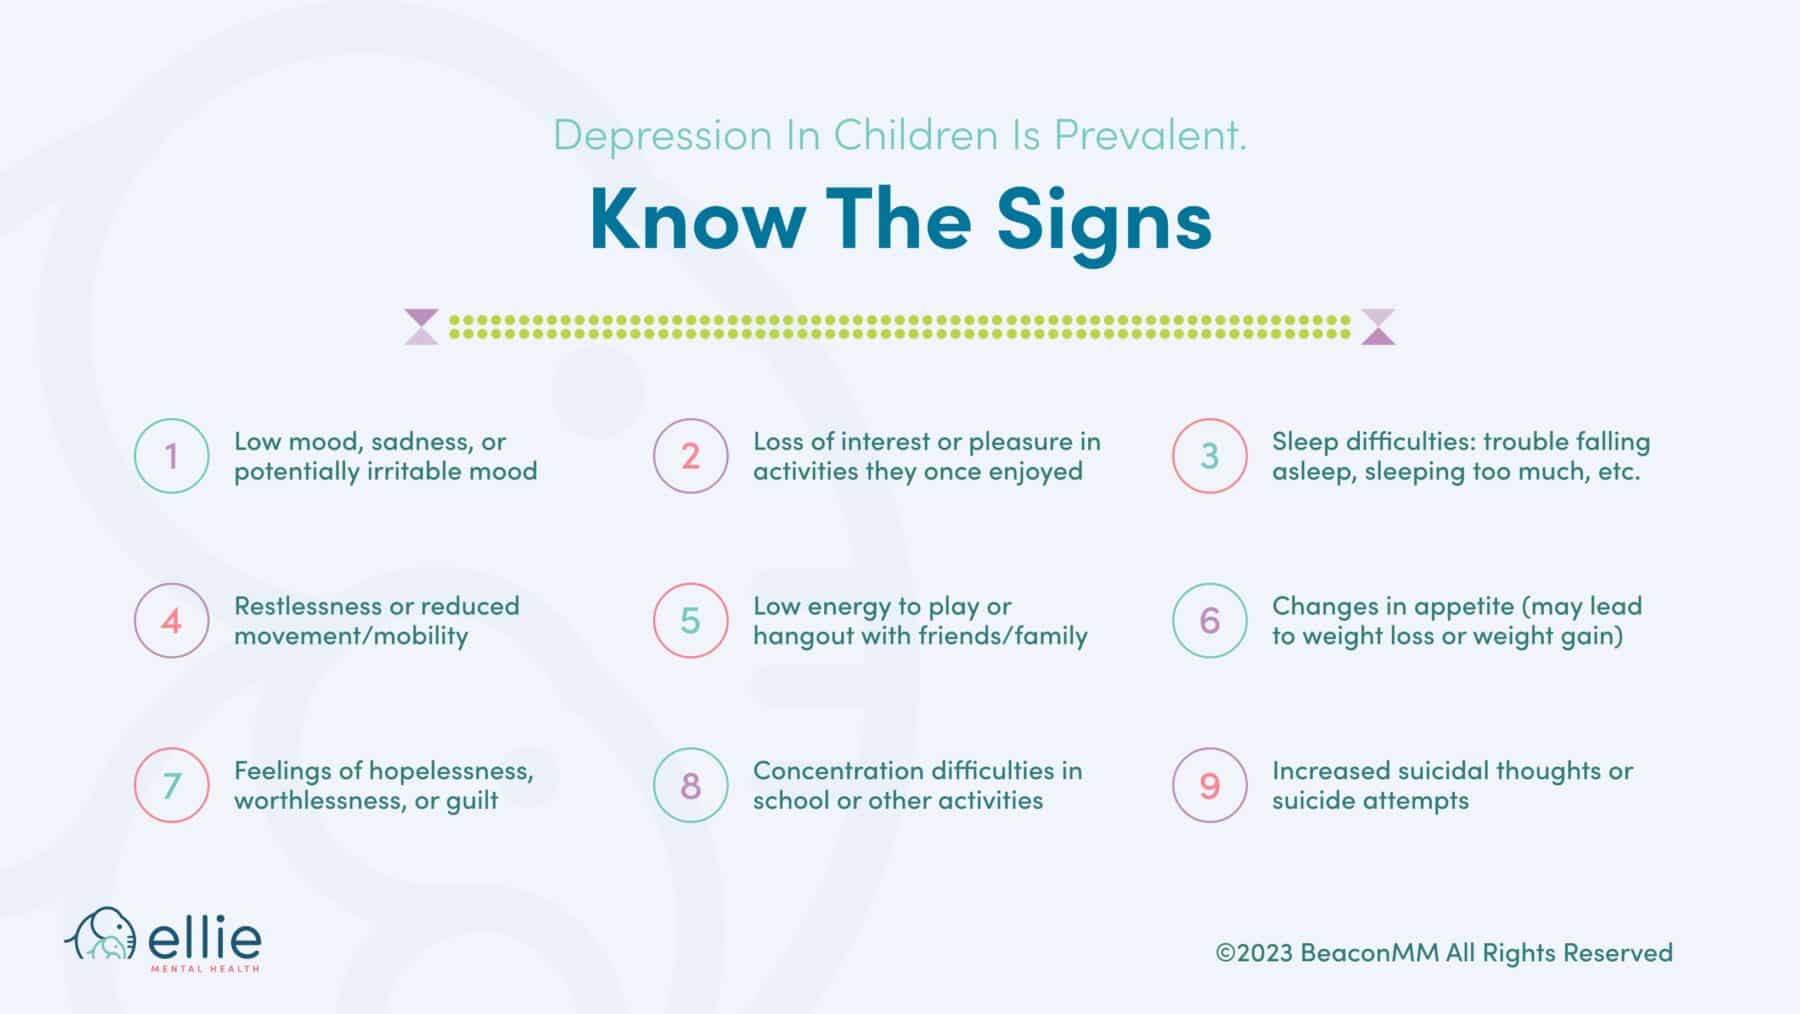 depression in children is prevalent infographic